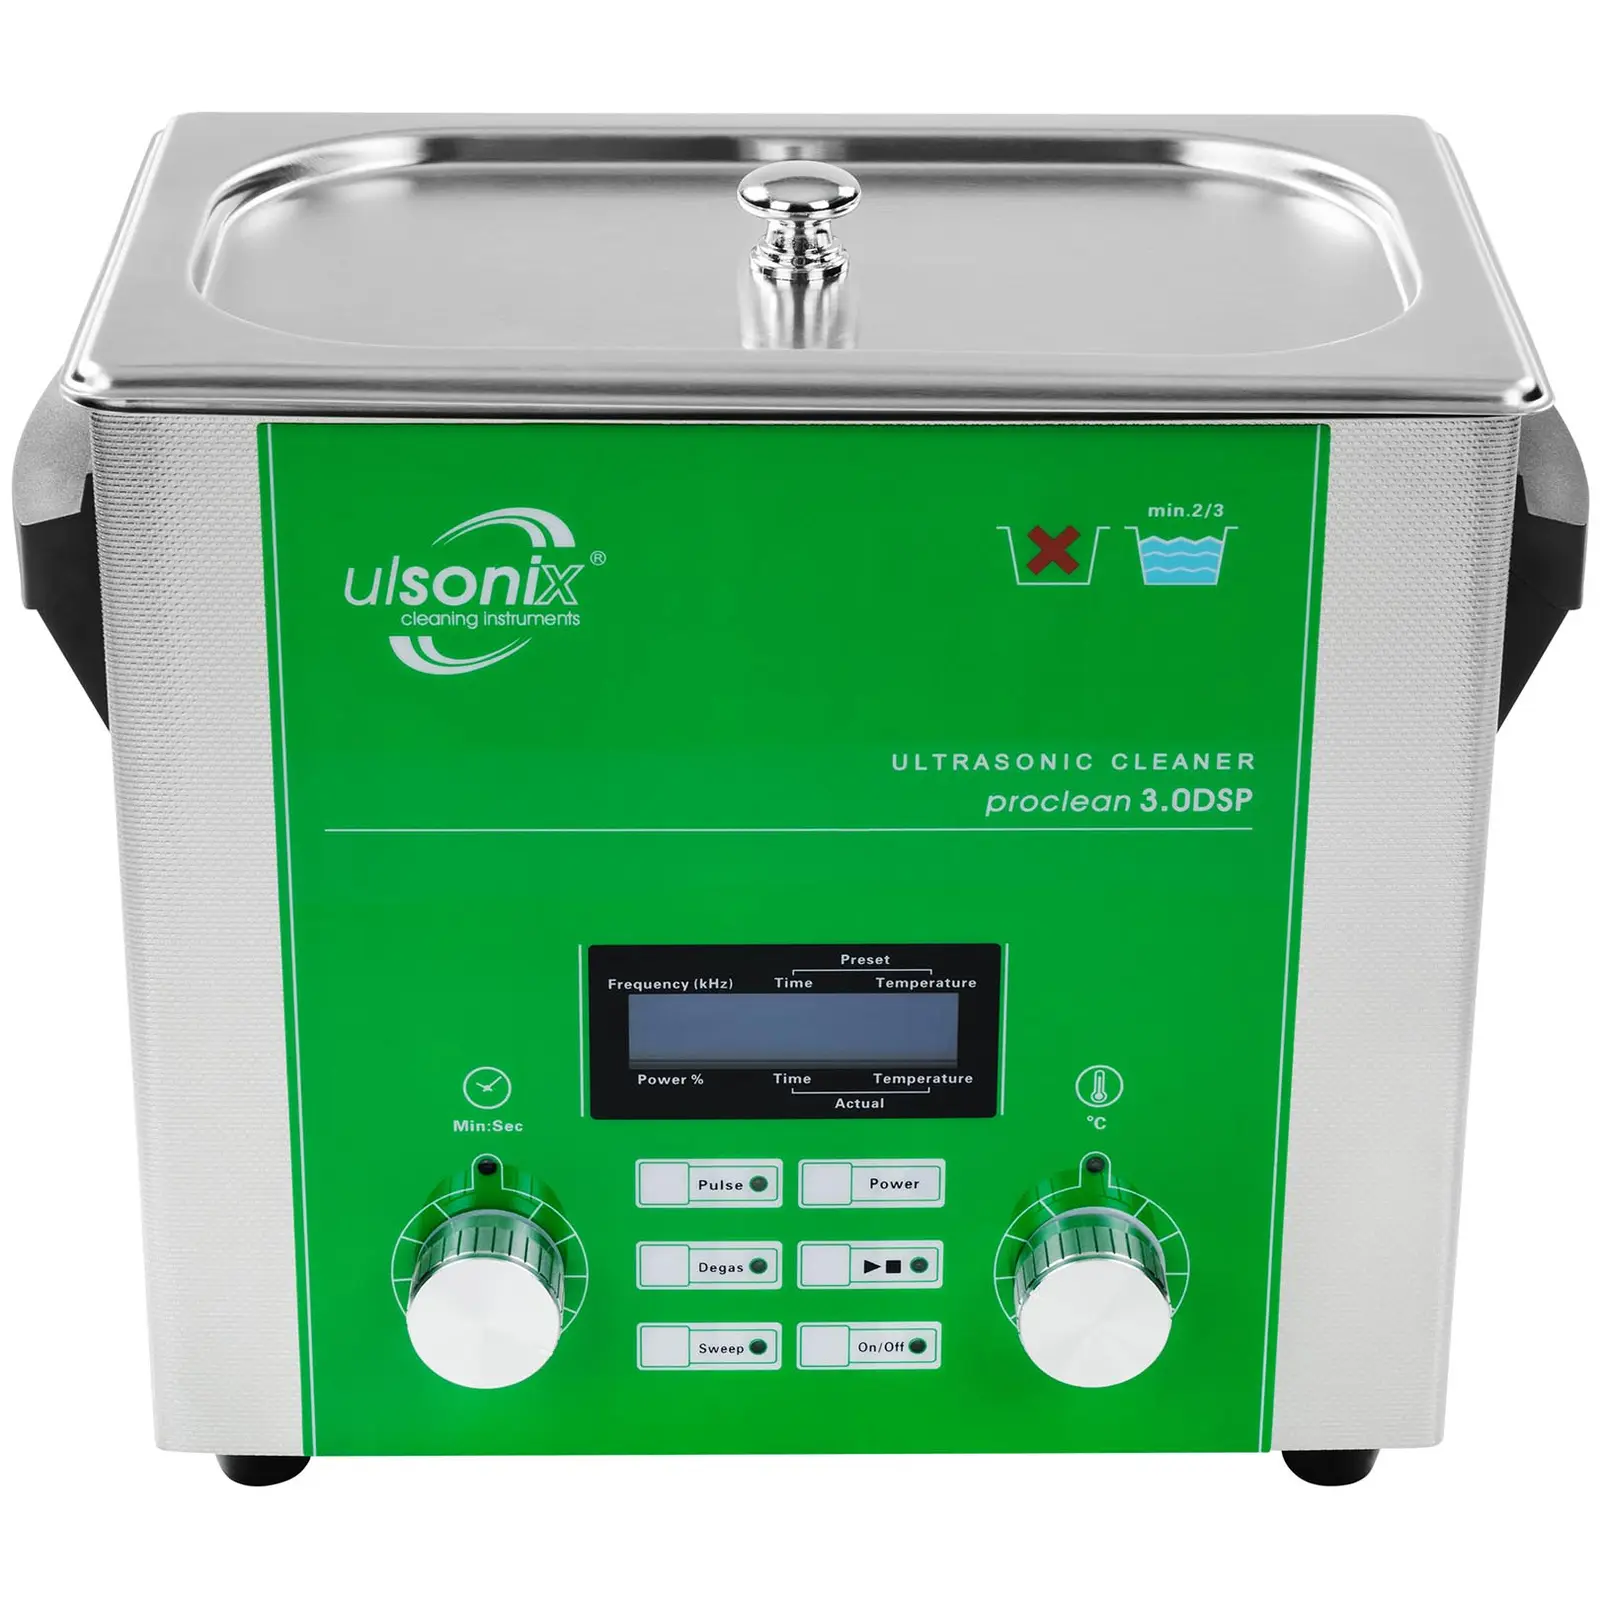 Ultrazvuková čistička - 3 litre - Degas - Sweep - Pulz